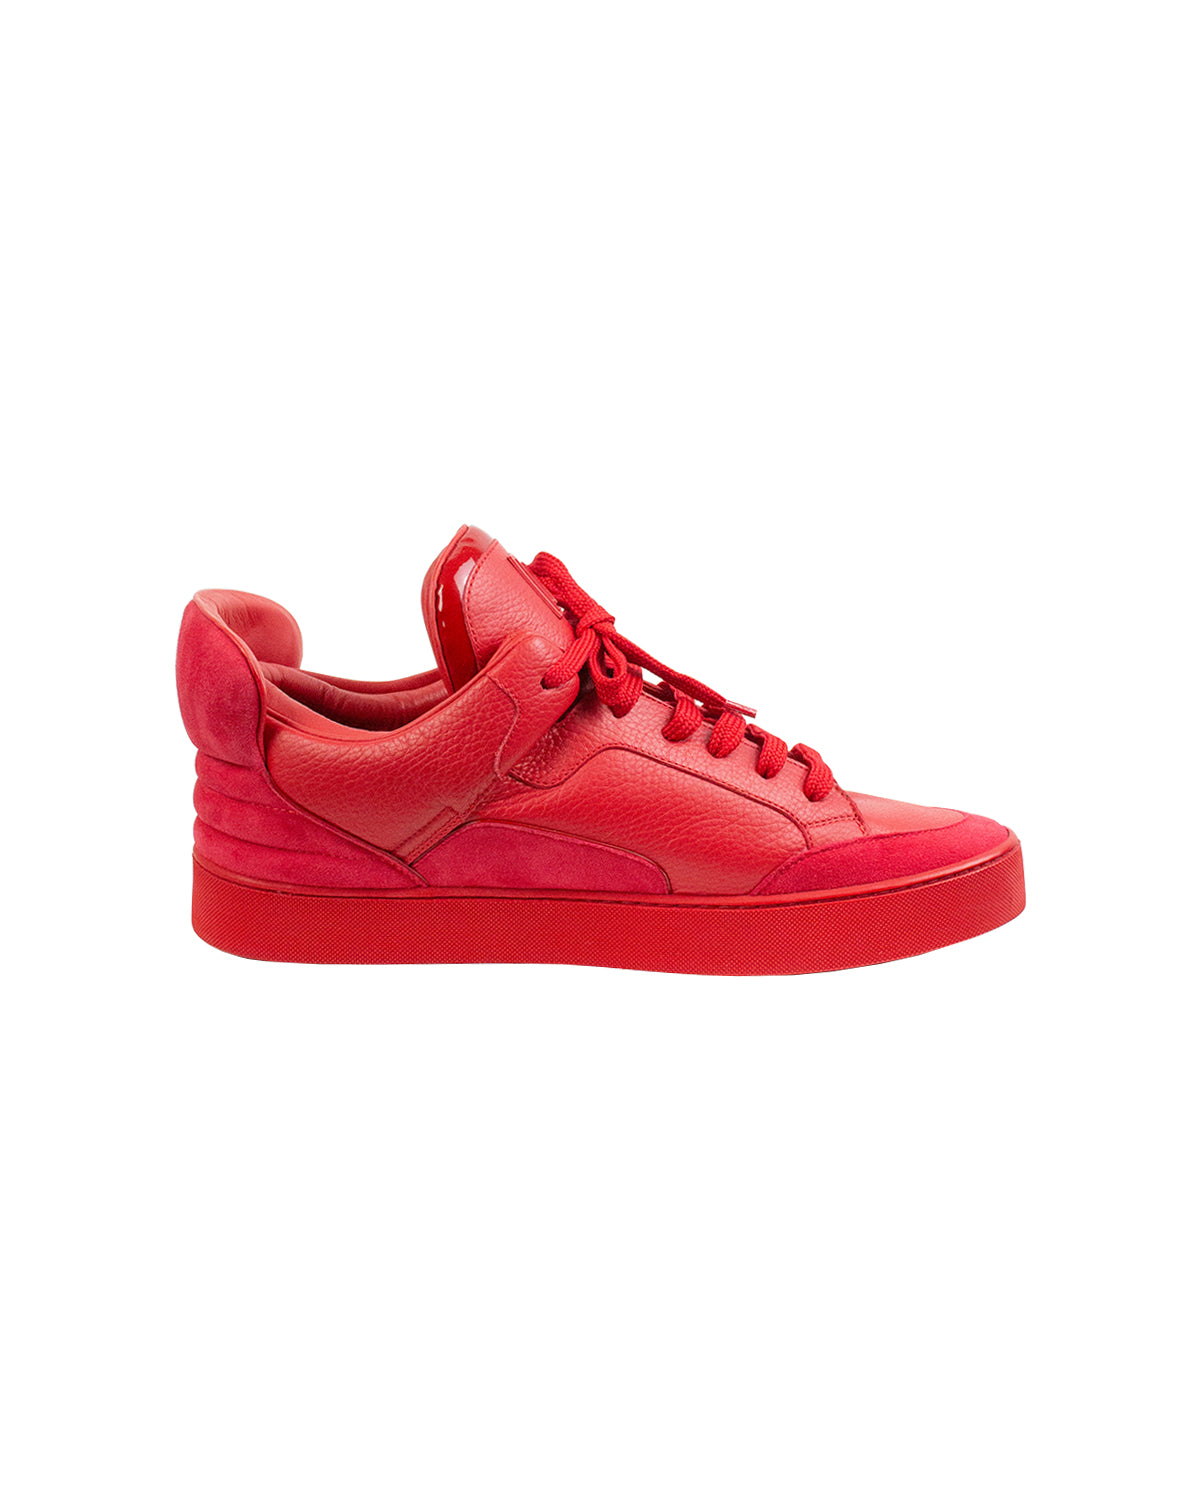 Louis Vuitton Don Kanye Red  Luis vuitton shoes, Red louis vuitton shoes, Louis  vuitton shoes